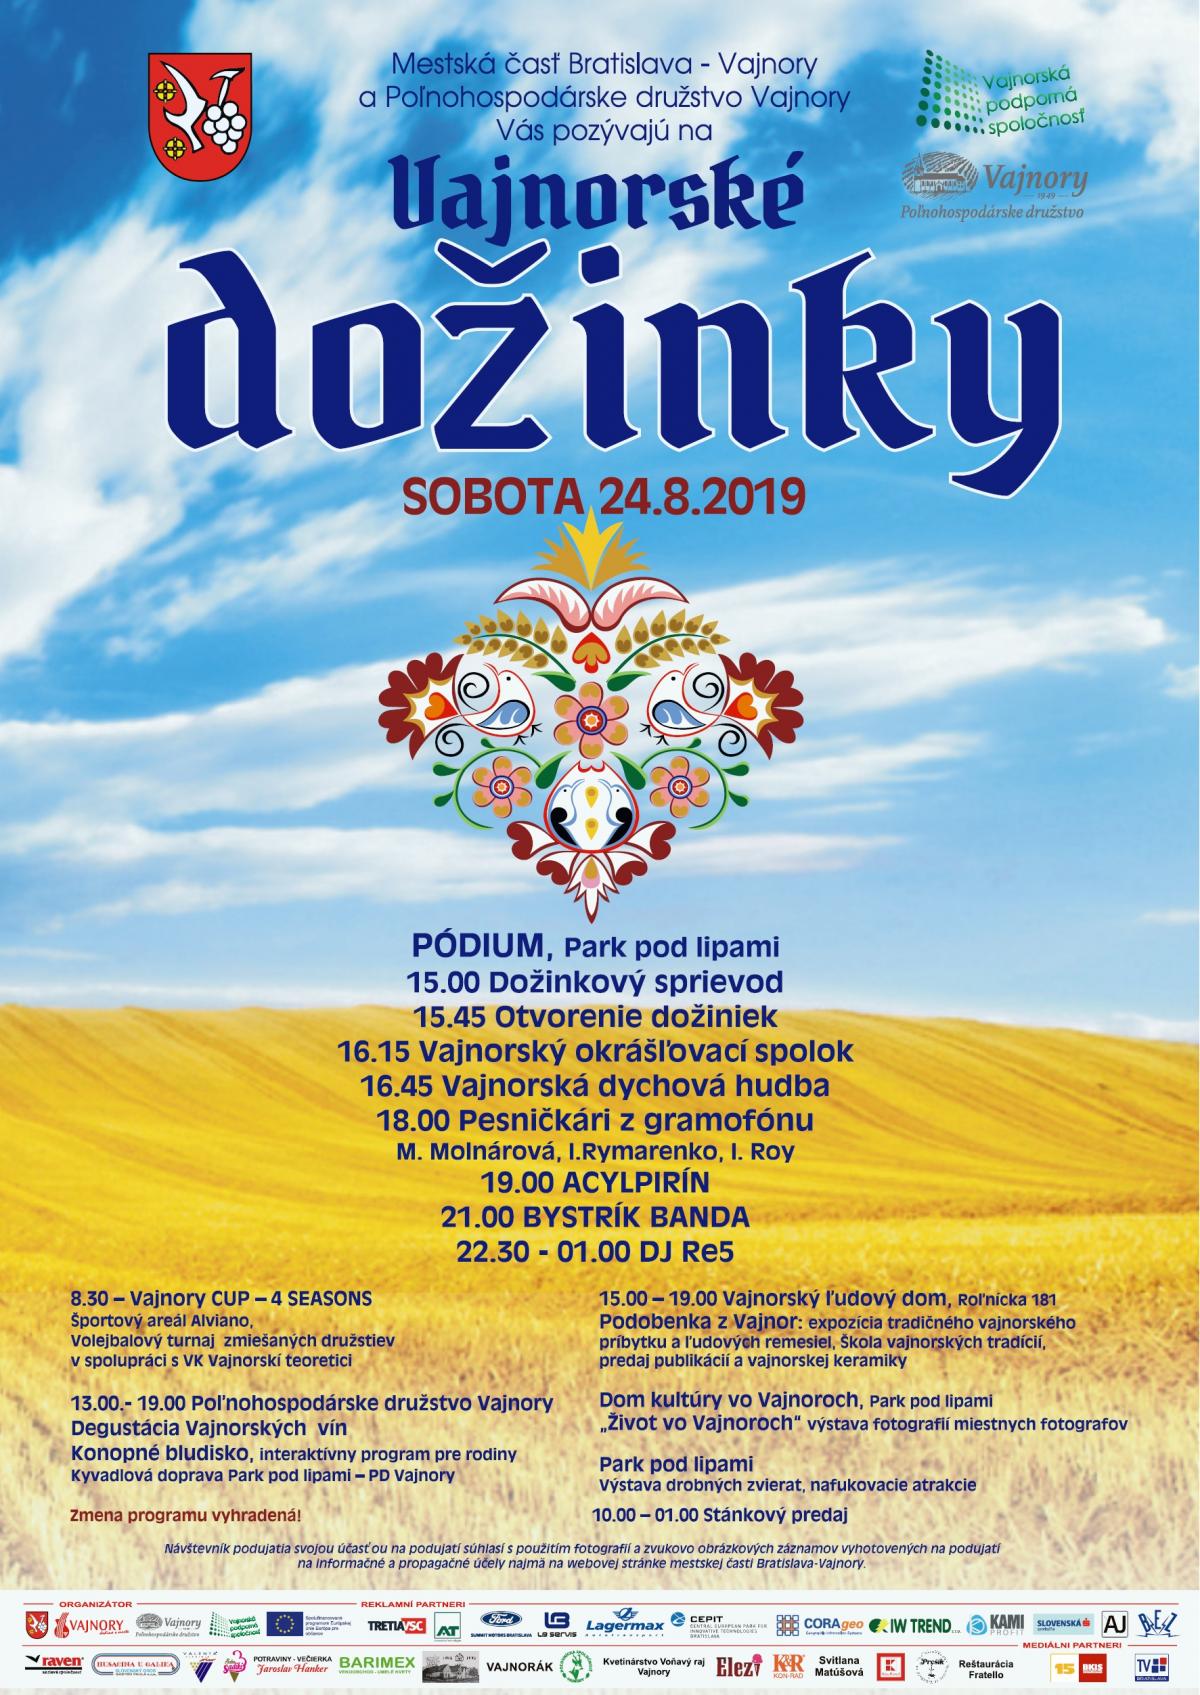 Vajnorsk doinky 2019 - 16. ronk